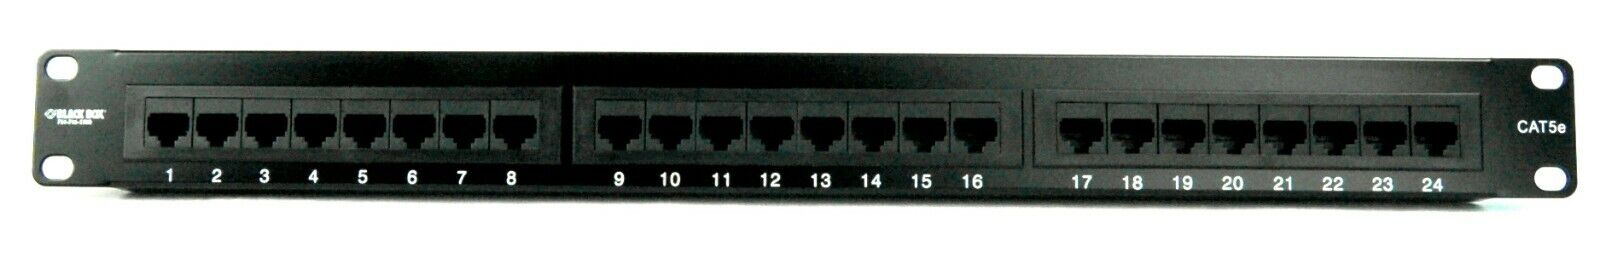 Black Box Econo Cat5E Universal Patch Panel, 24 Port - 10066860